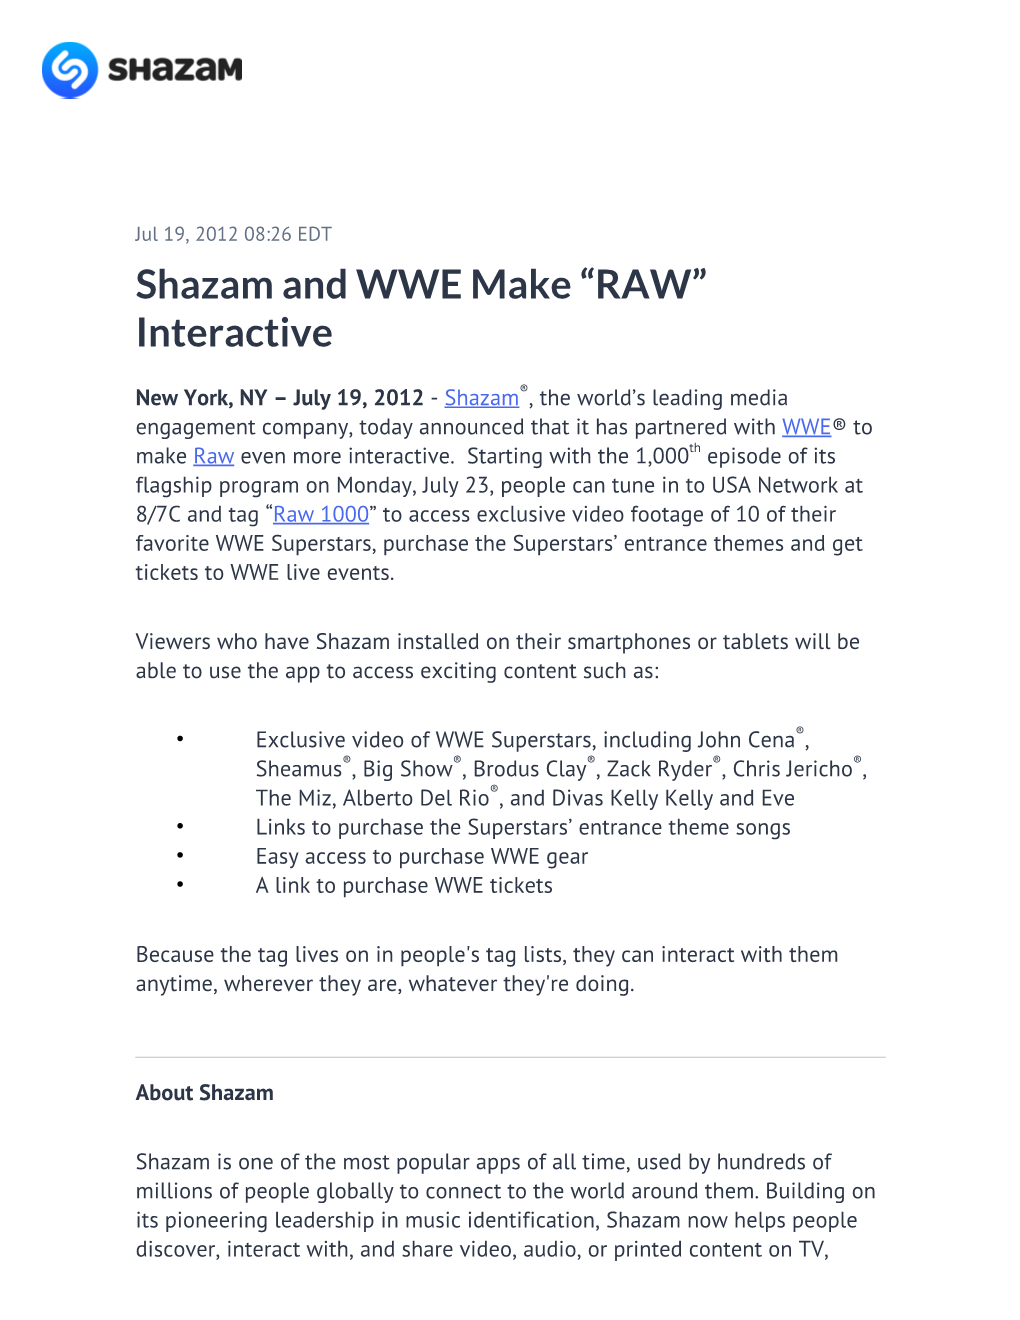 Shazam and WWE Make “RAW” Interactive